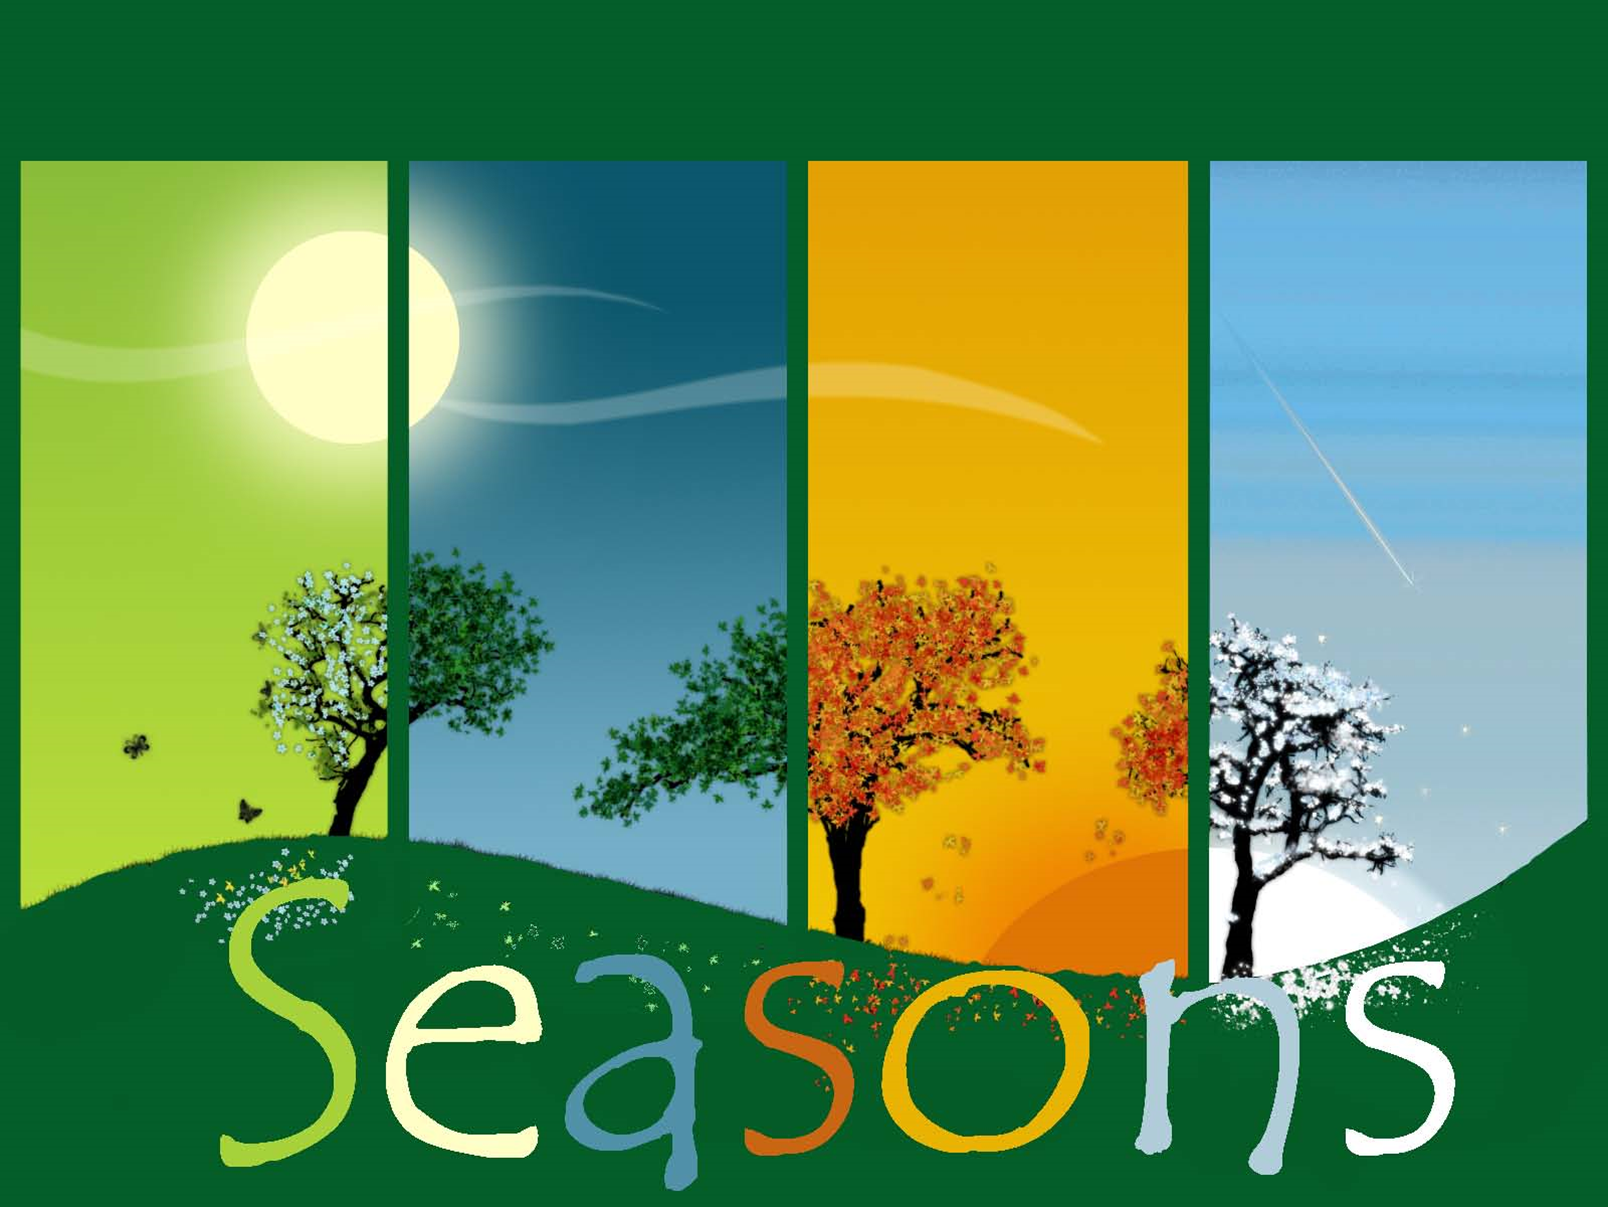 Времена года картинки. Четыре времени года рисунок. 4 seasons of the year